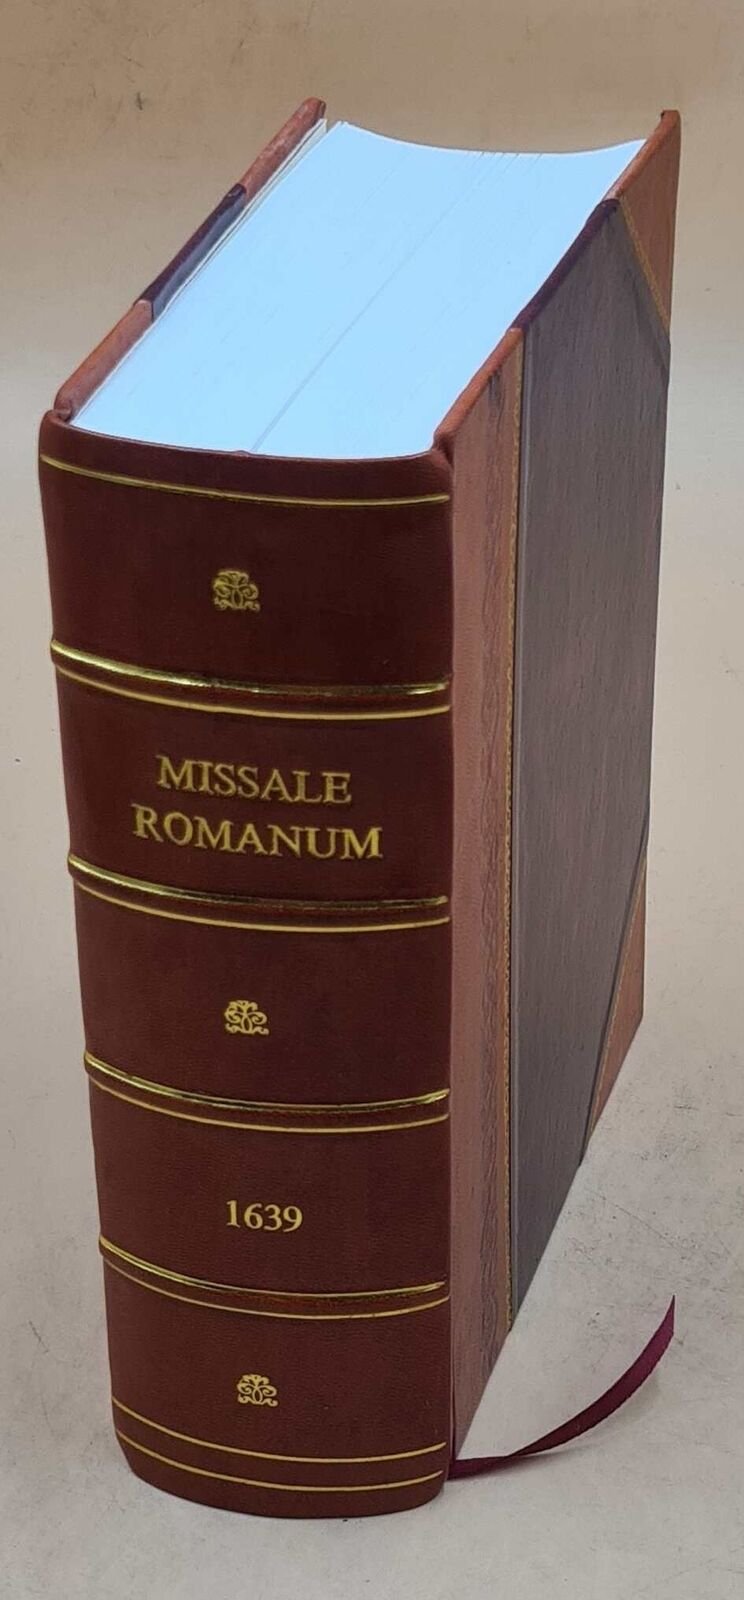 [Missale romanum. 1639 by Catholic Church [LEATHER BOUND]